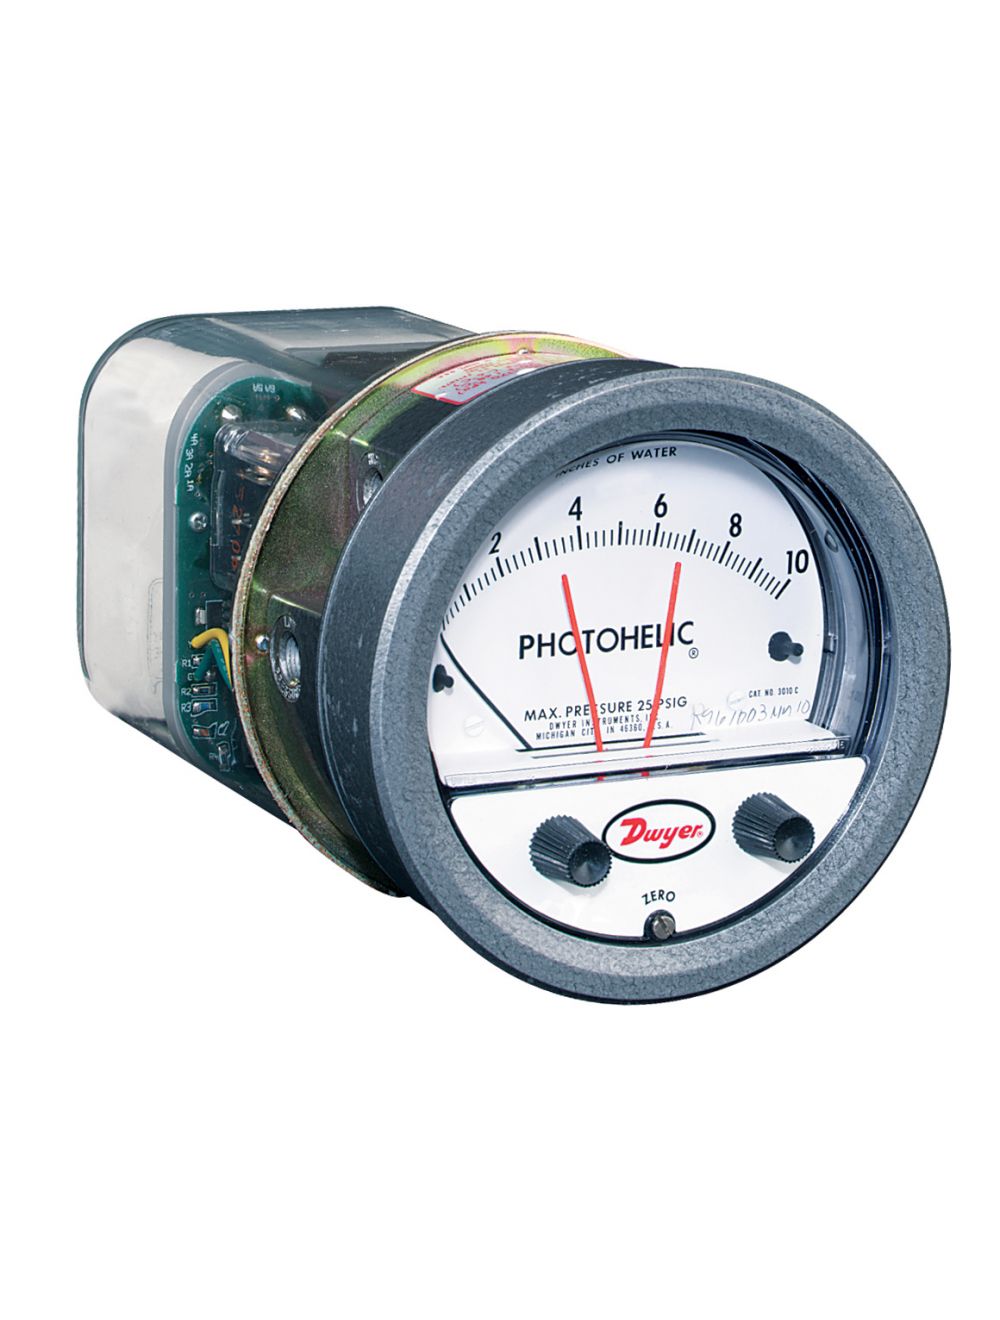 Dwyer Photohelic Series A3000 Pressure Switch/Gauge Range 5-0-5WC 